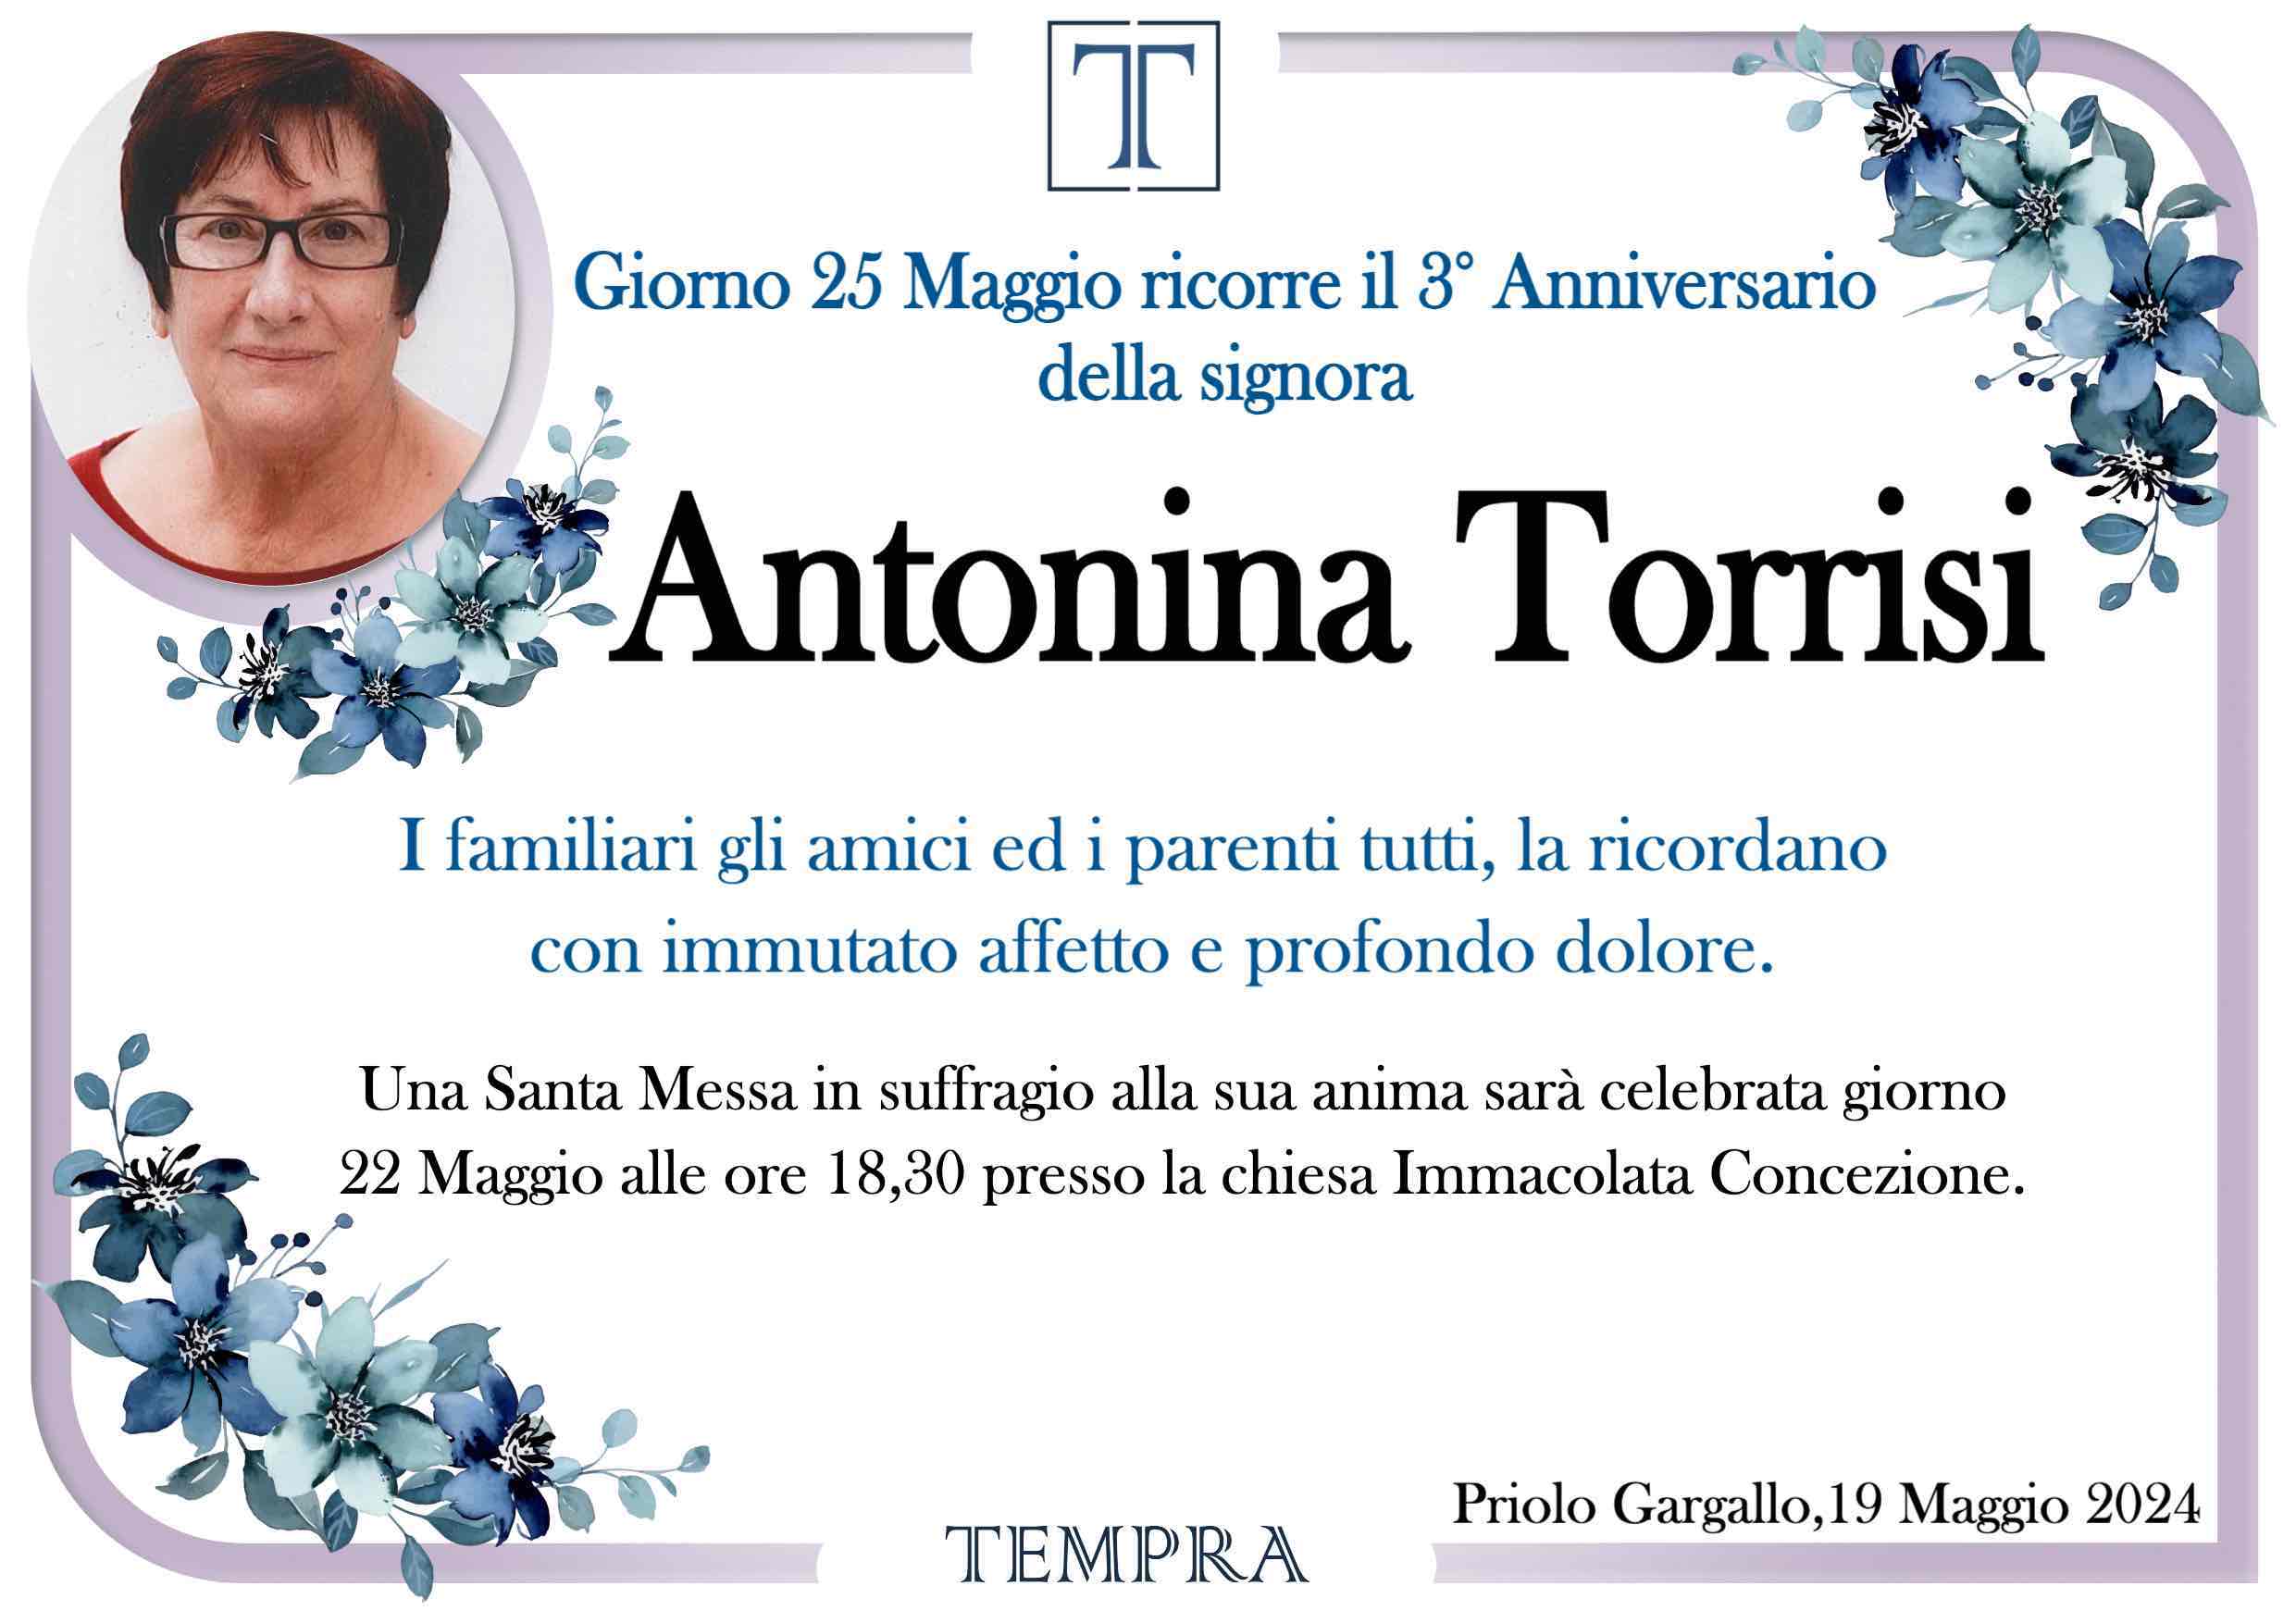 Antonina Torrisi